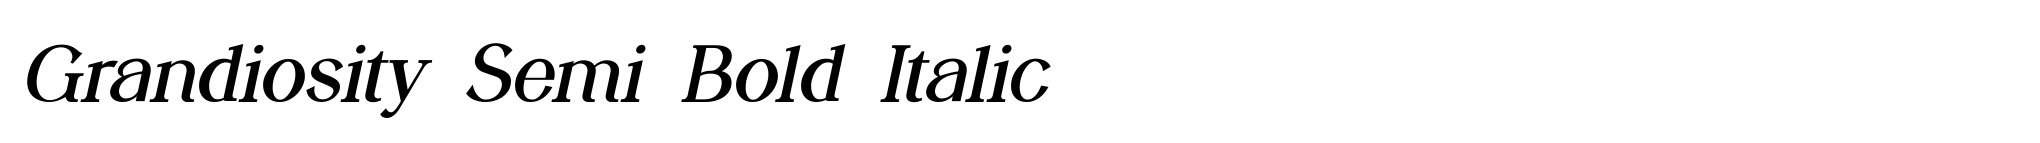 Grandiosity Semi Bold Italic image